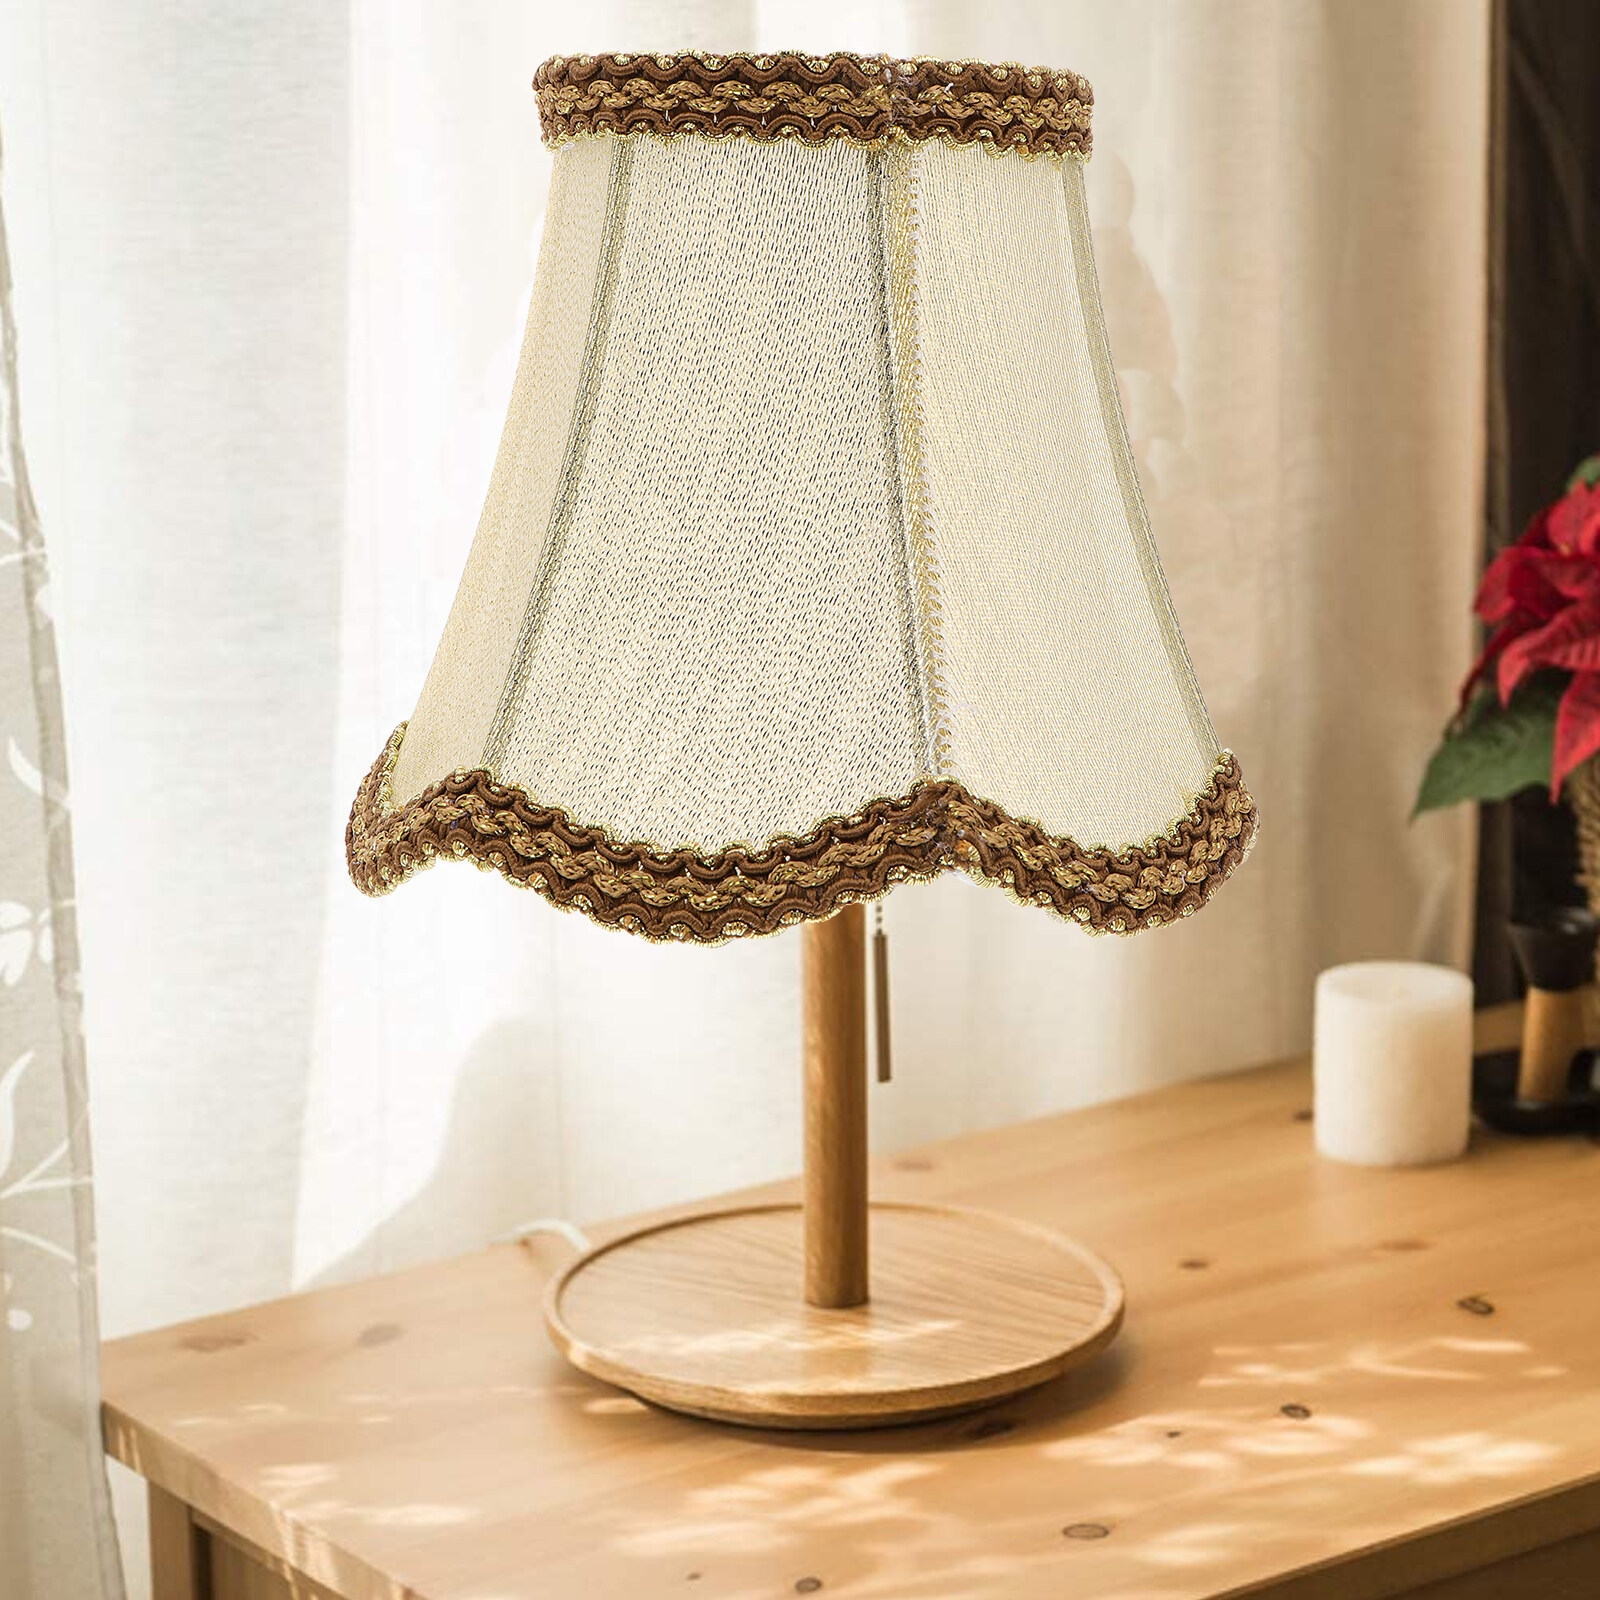 rosenice Drum Lamp Shade Woven Lamp Shade Lampshade for Table Lamp Bedside Lamp Floor Lamp Fabric Modern E27 22cm Beige 